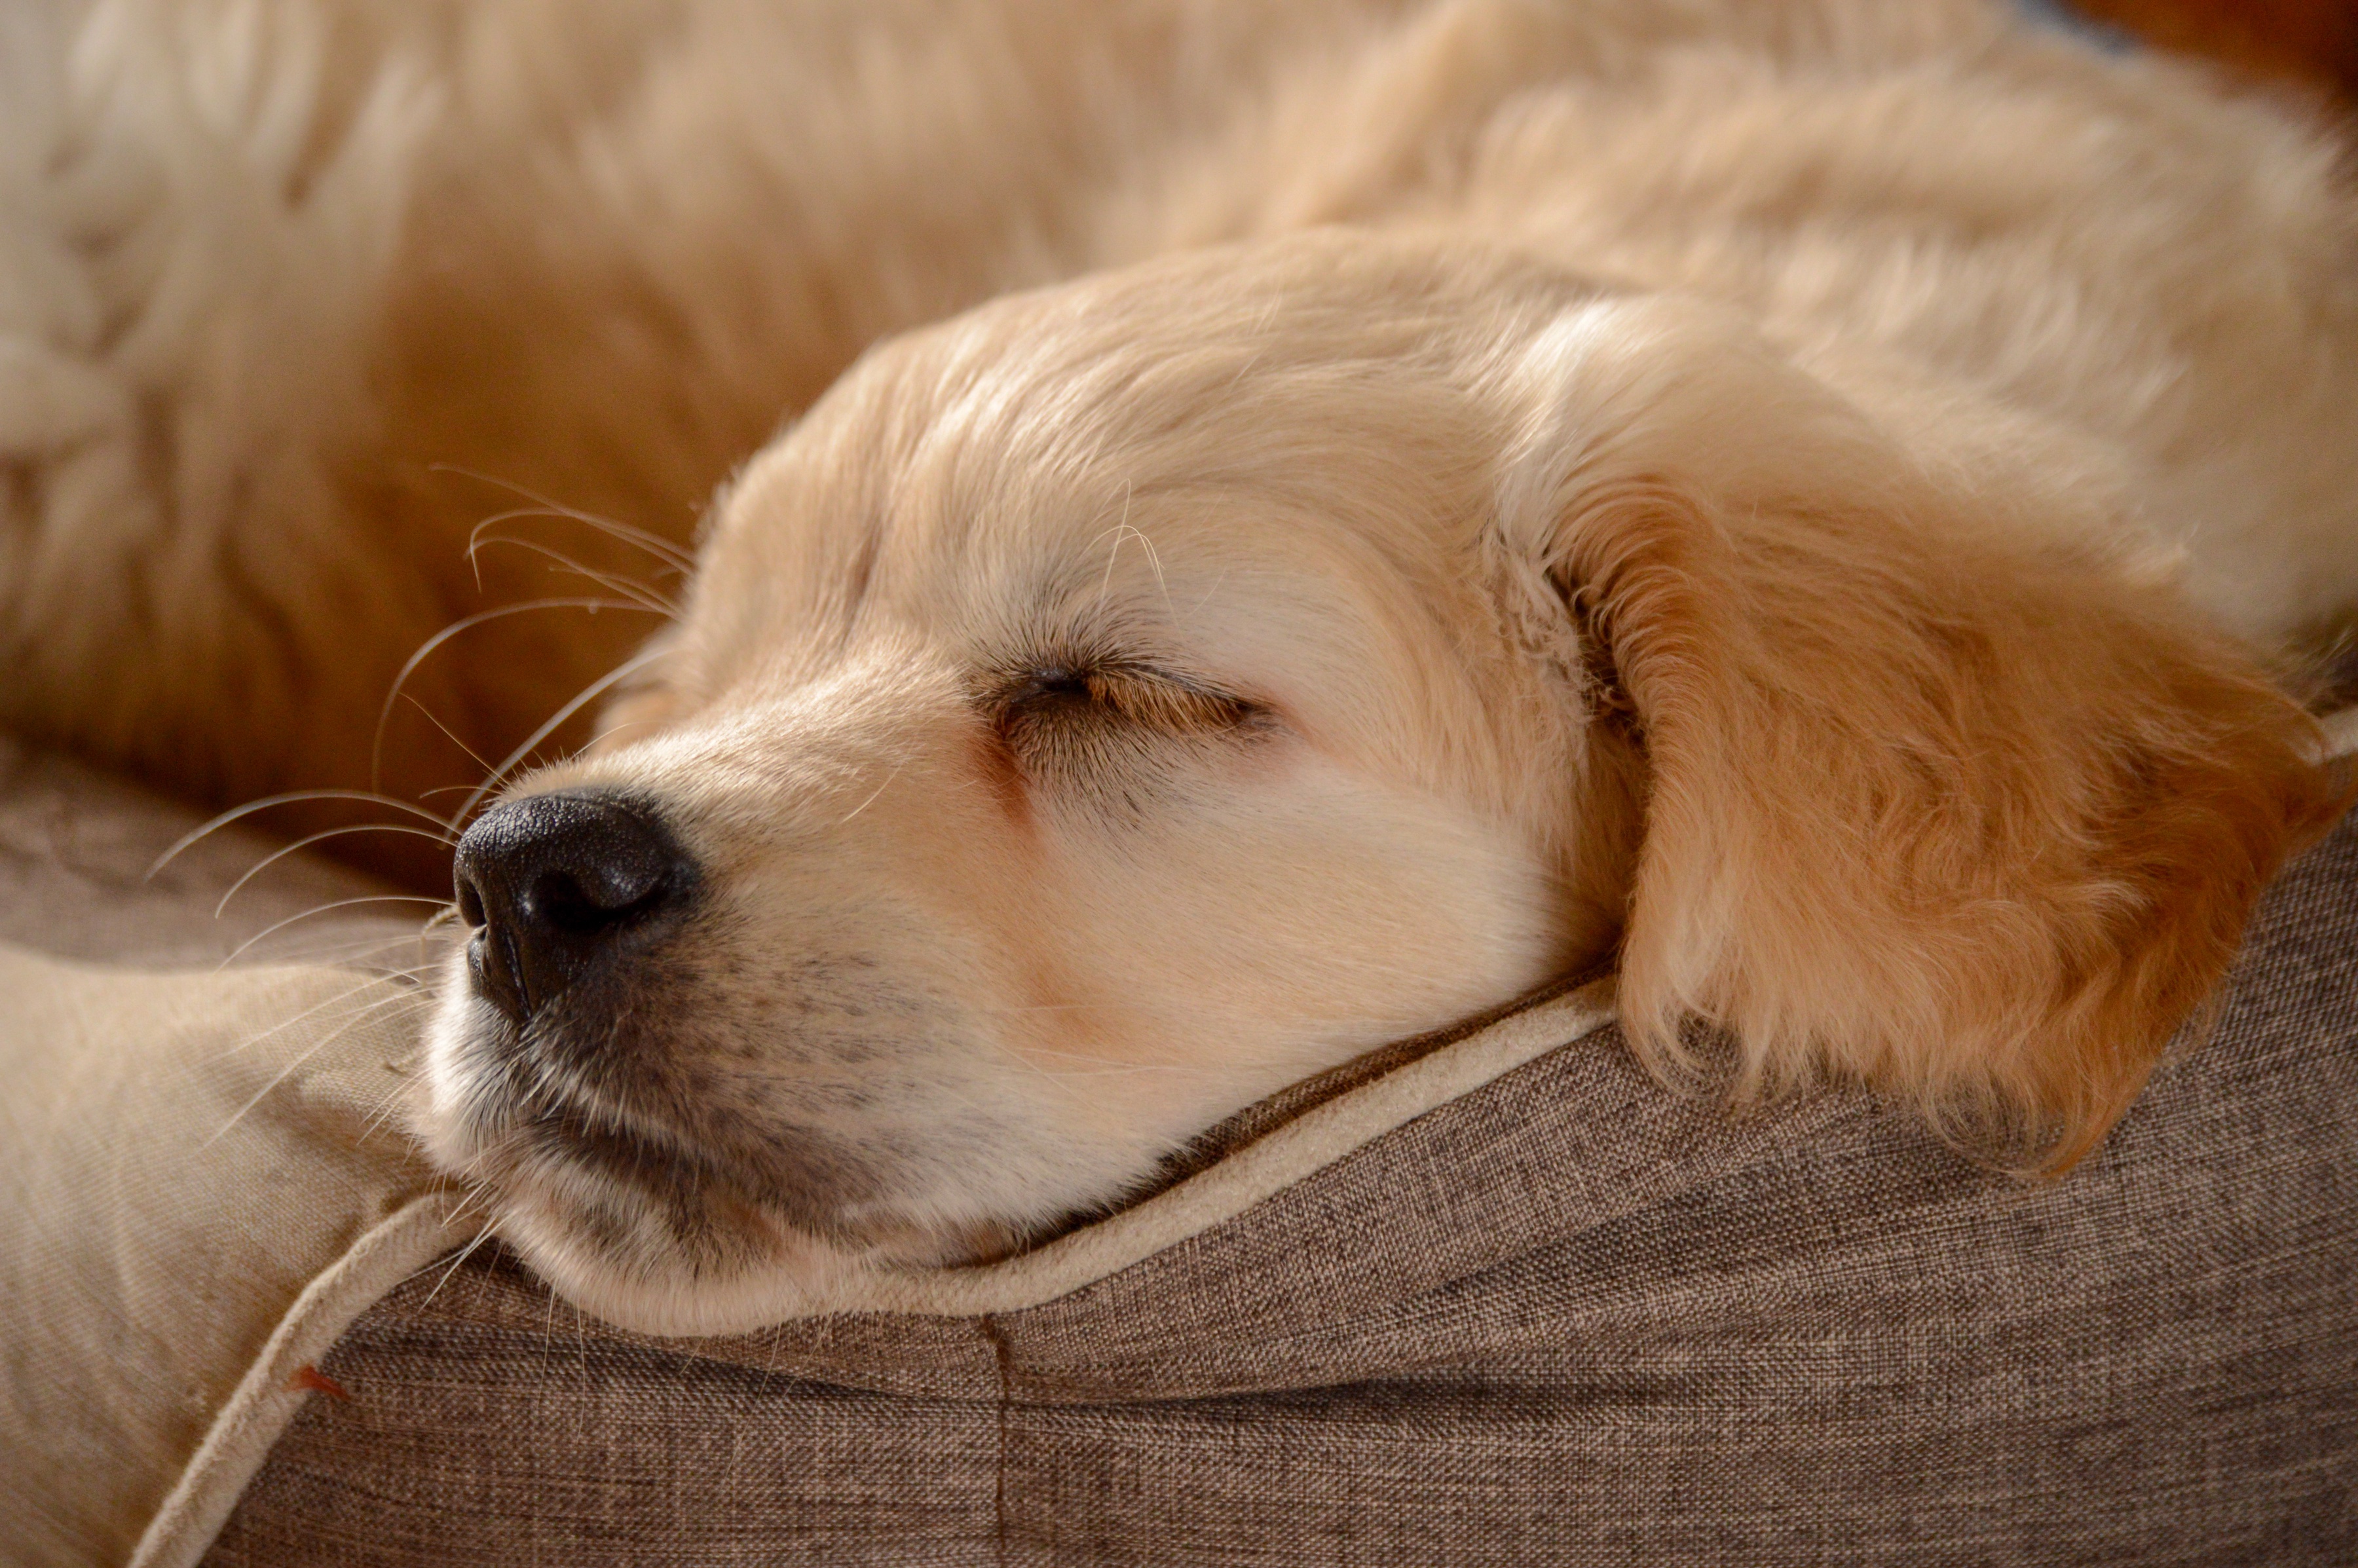 Baby Animal Dog Golden Retriever Pet Puppy Sleeping 3600x2394